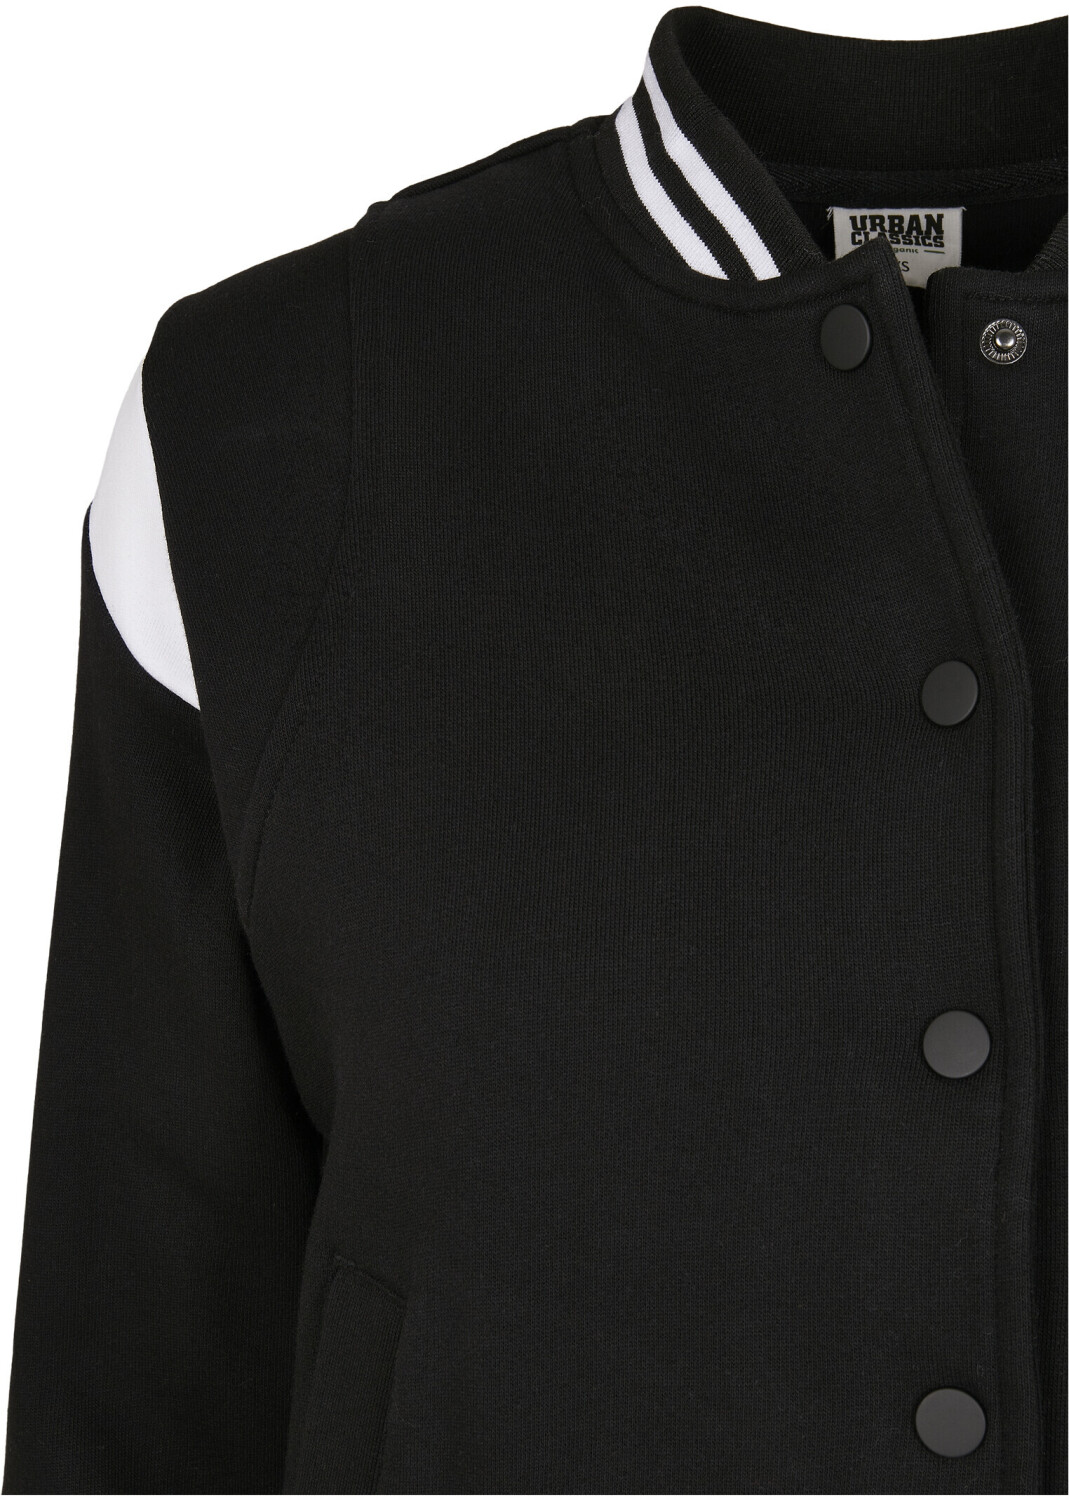 Urban | Inset black/white Organic Ladies € College Jacket (TB3776-00826-0037) ab 36,79 bei Preisvergleich Sweat Classics